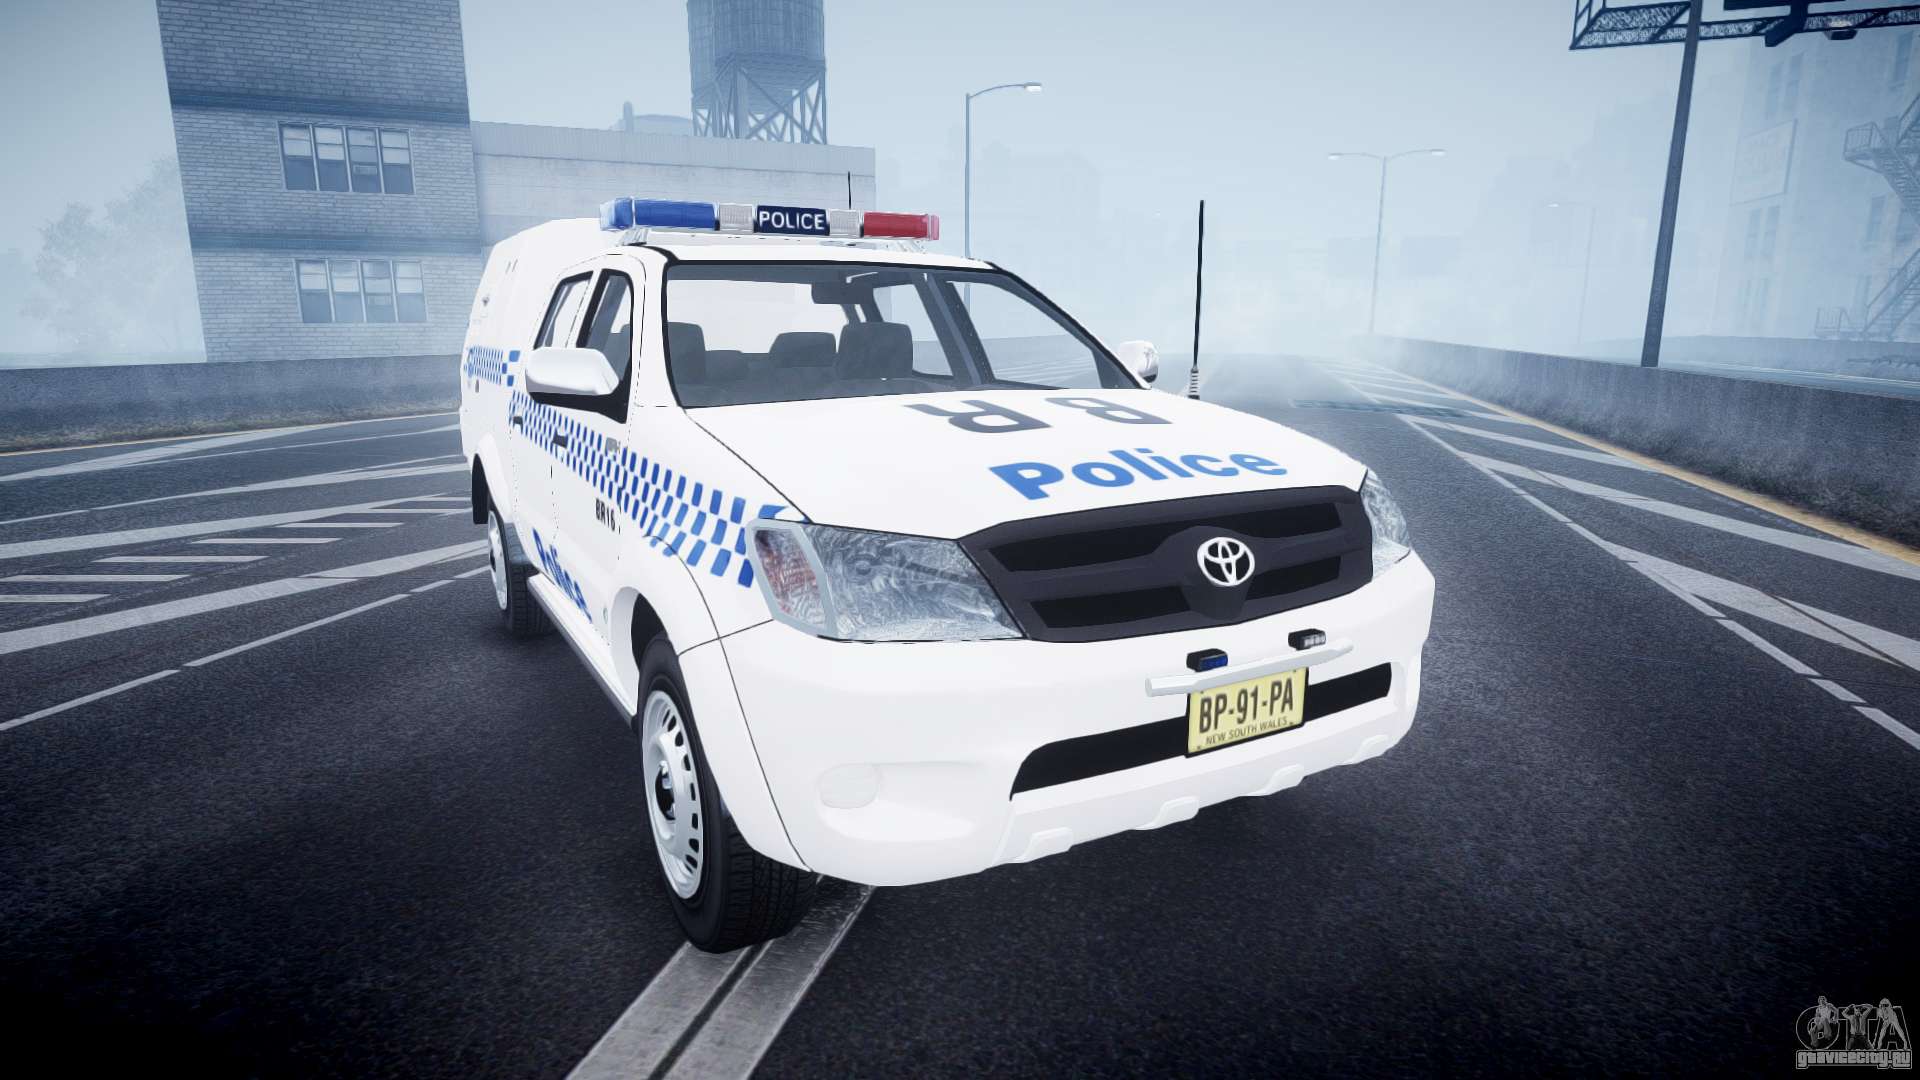 Toyota Hilux NSWPF ELS для GTA IV. 